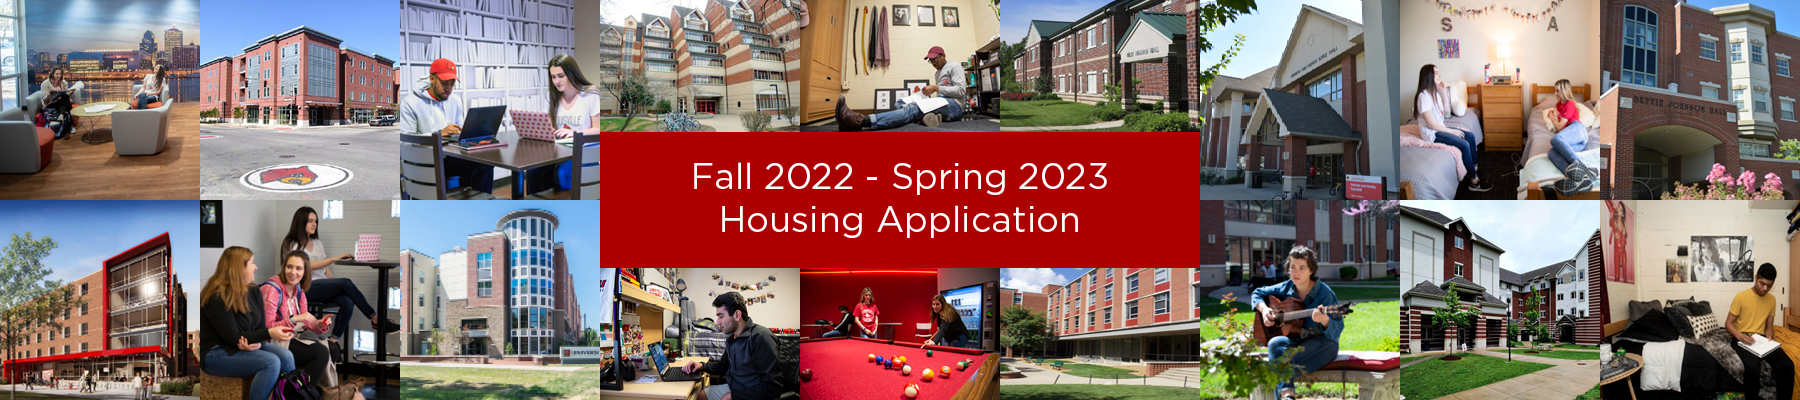 fall 2022-spring 2023 housing application